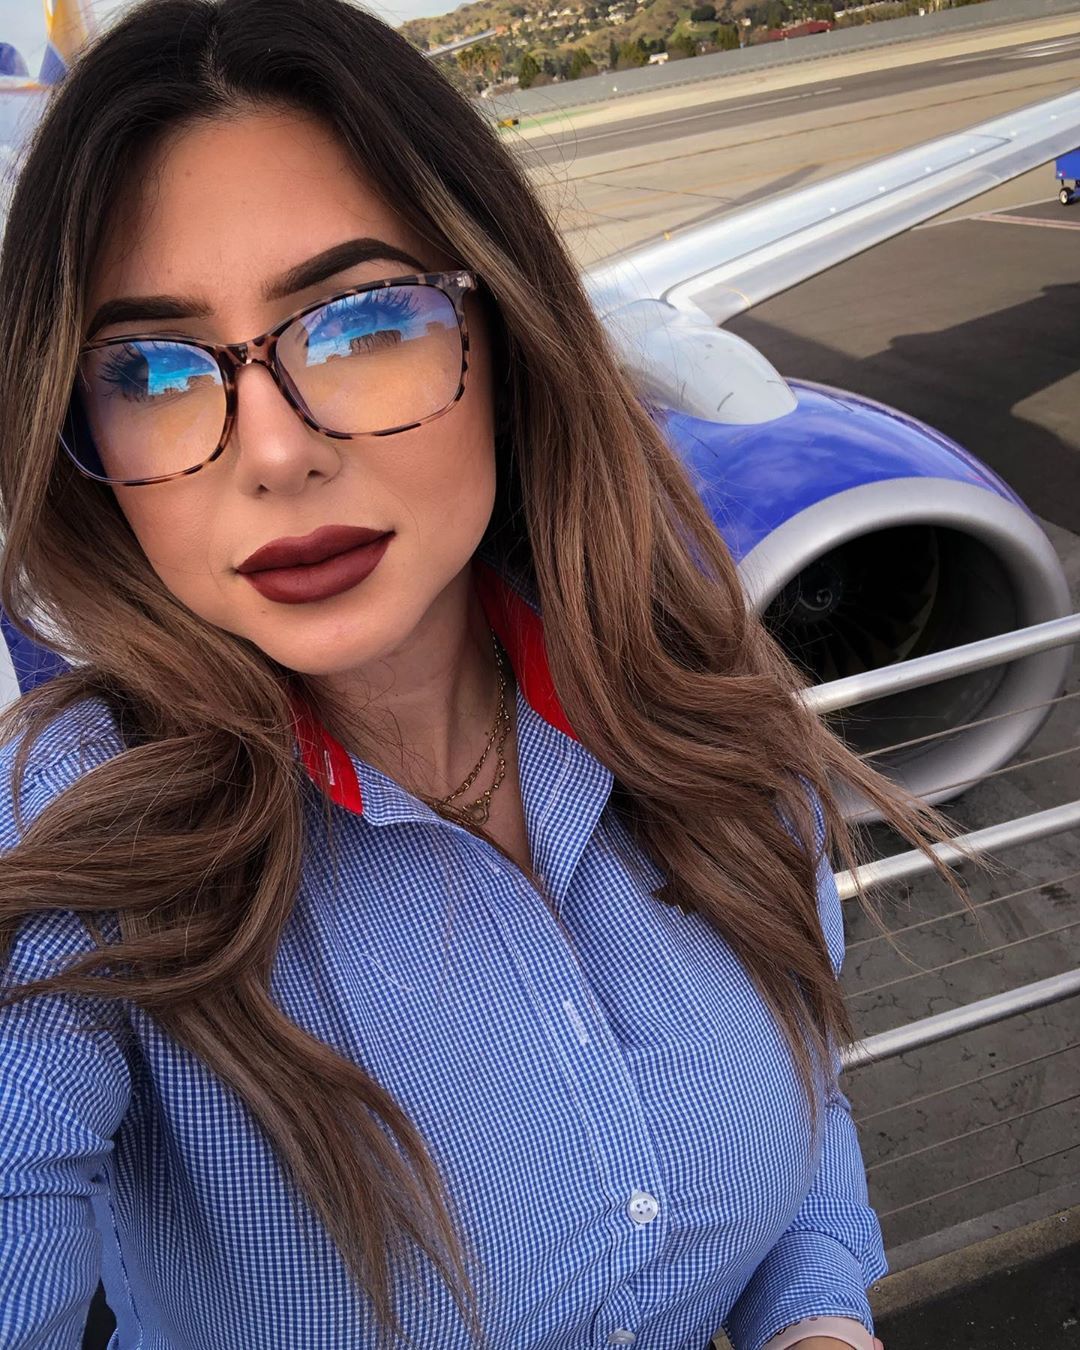 Flight attendant wearing glasses